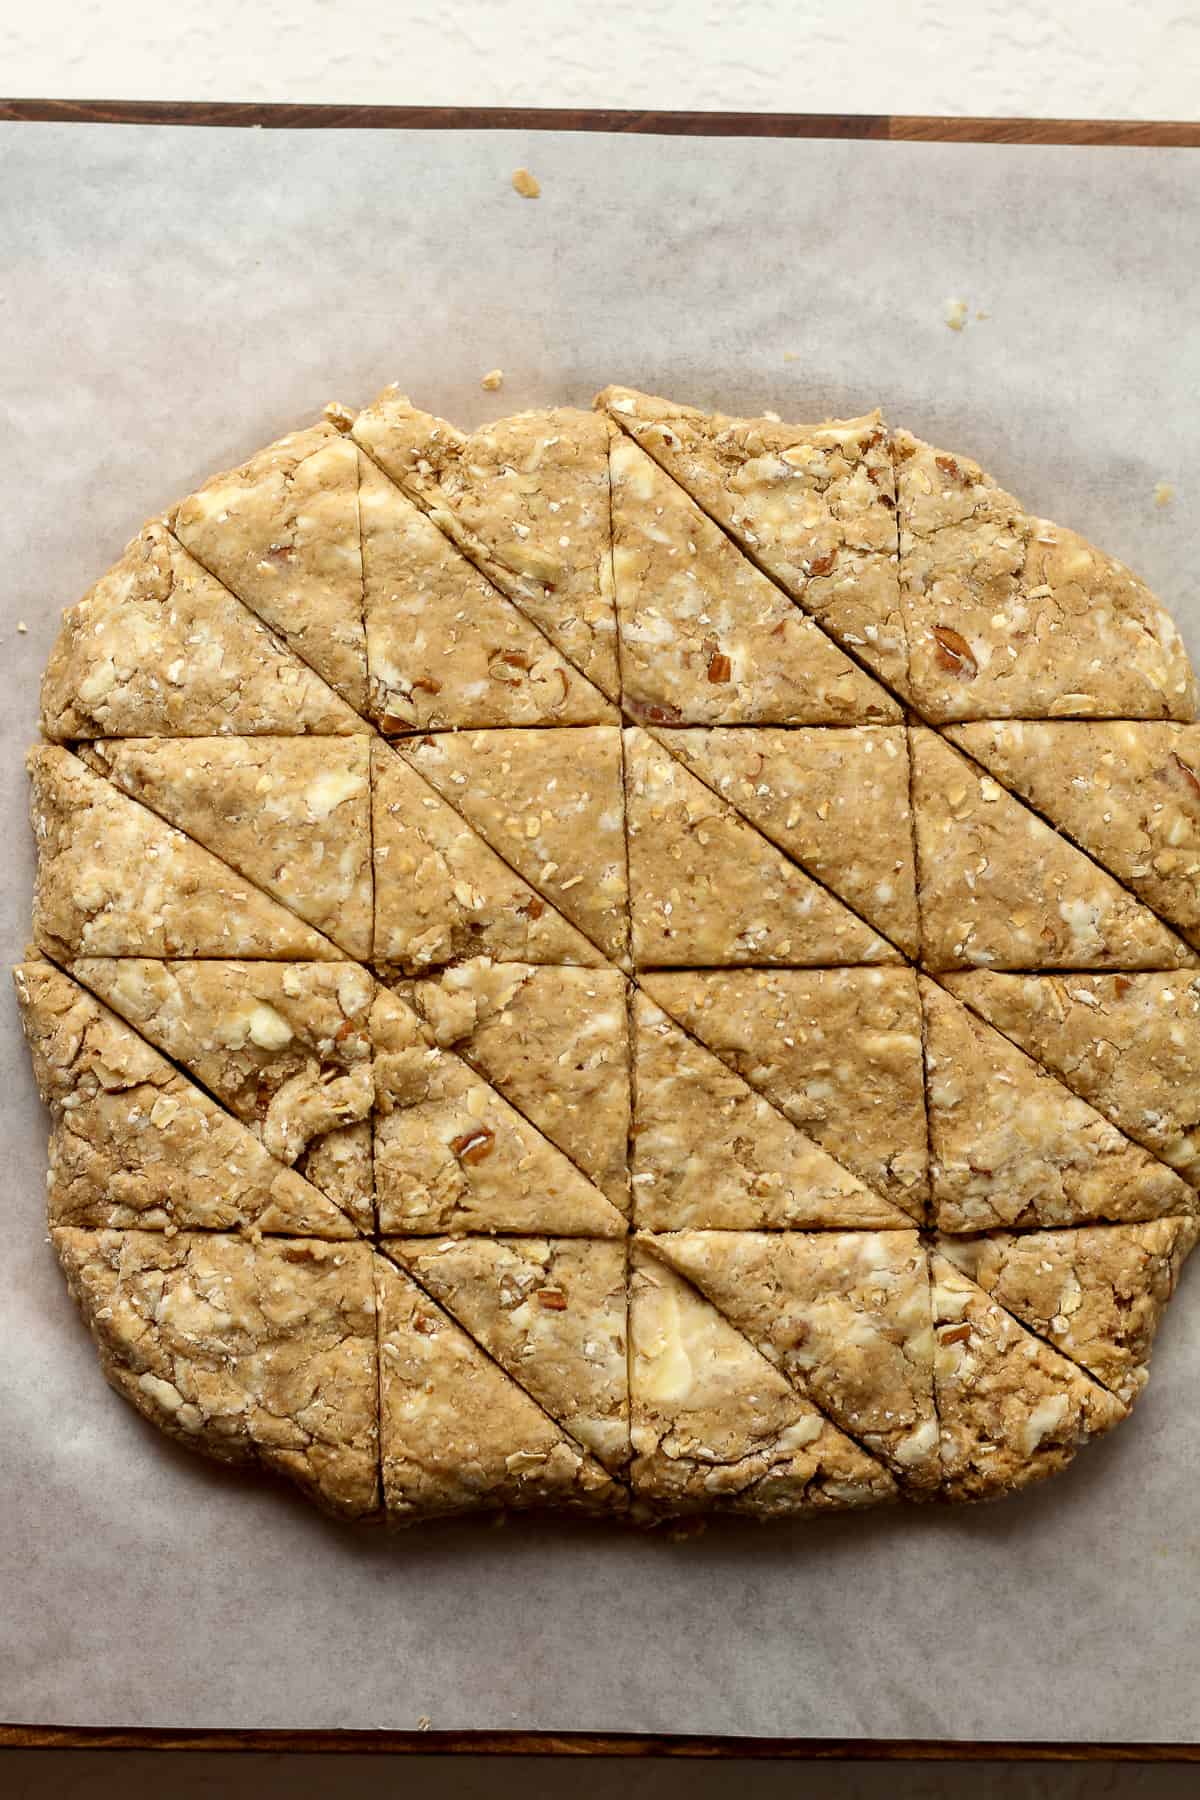 Closeup on some scone dough cut into triangles.